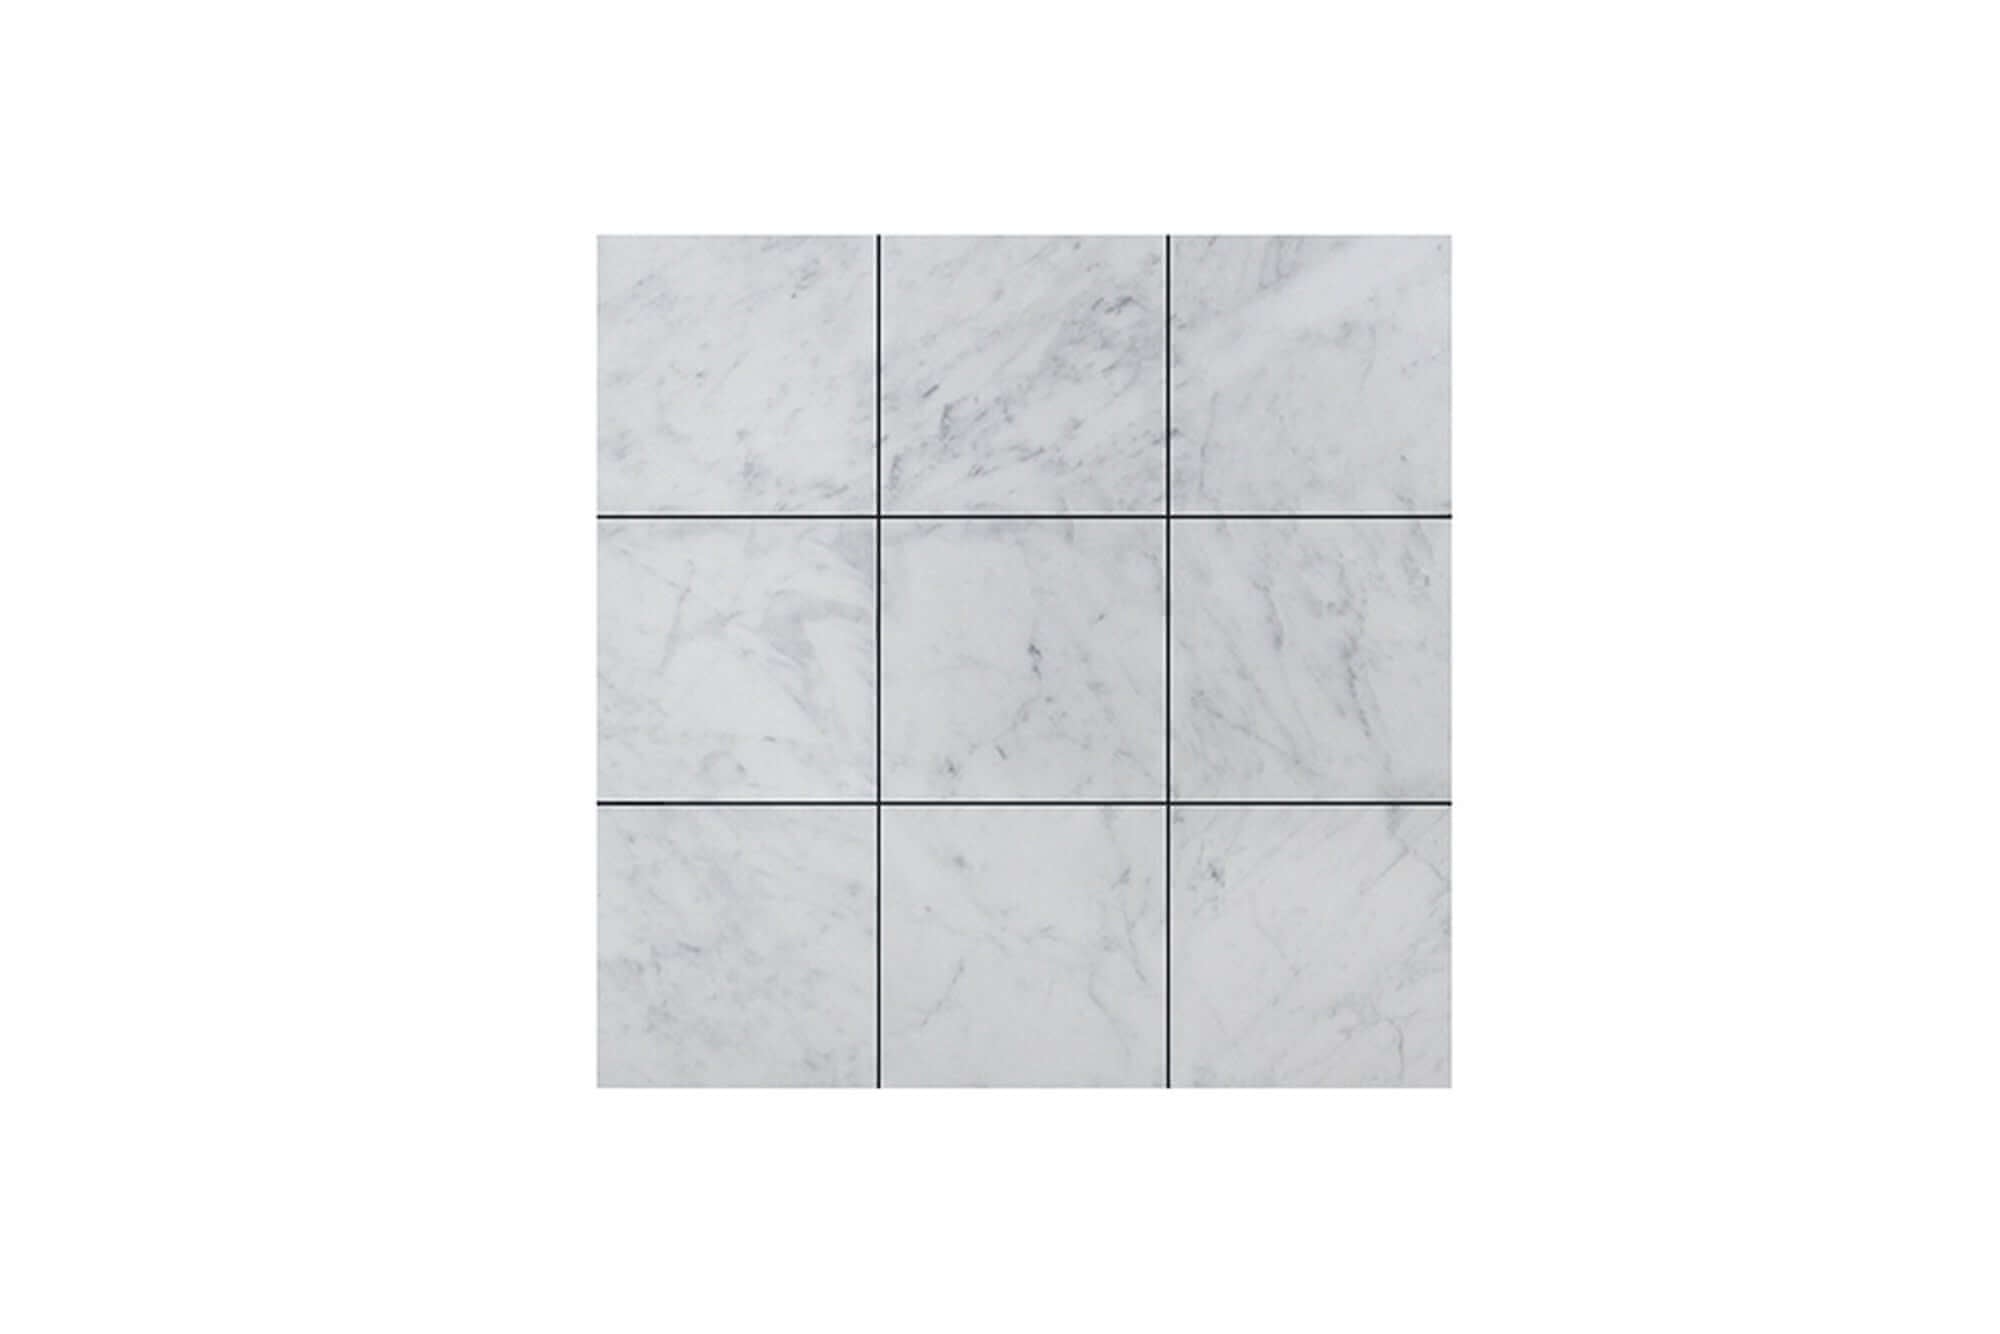 Bianco Carrara Marble Subway Tile 4 x 4 Polished